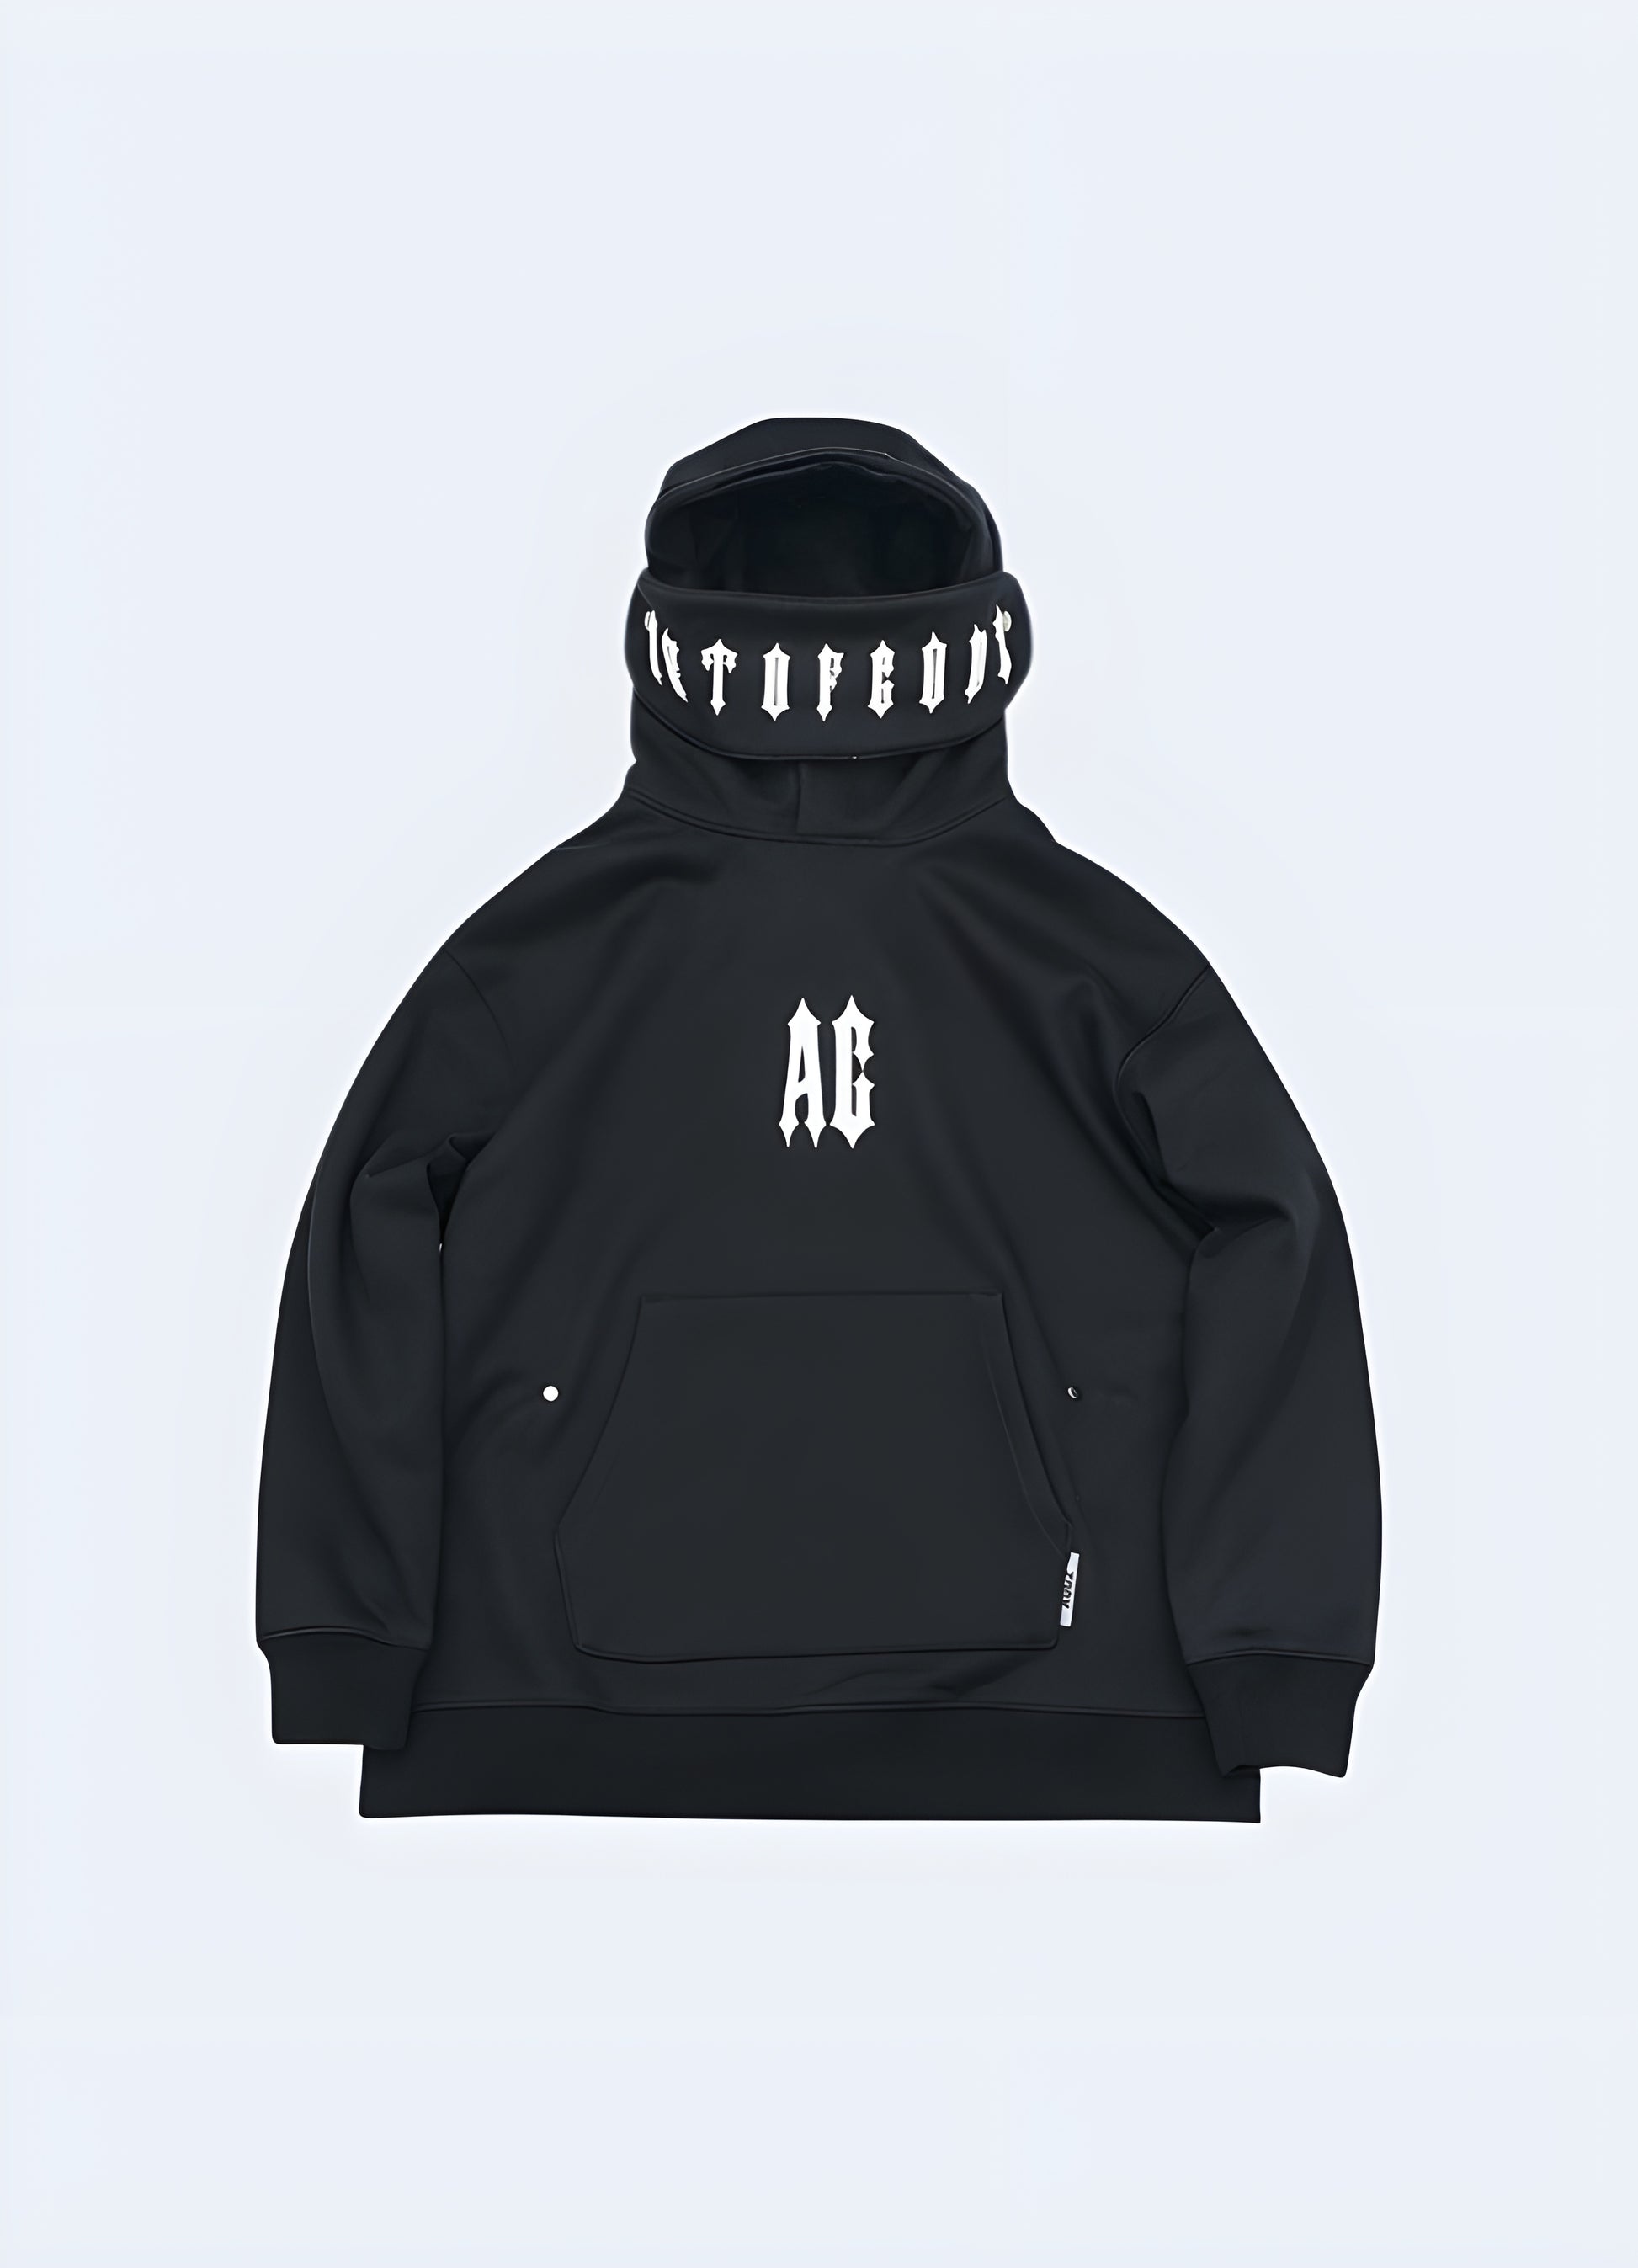 This sleek black hoodie with an inverse cross print is the perfect goth hoodie.